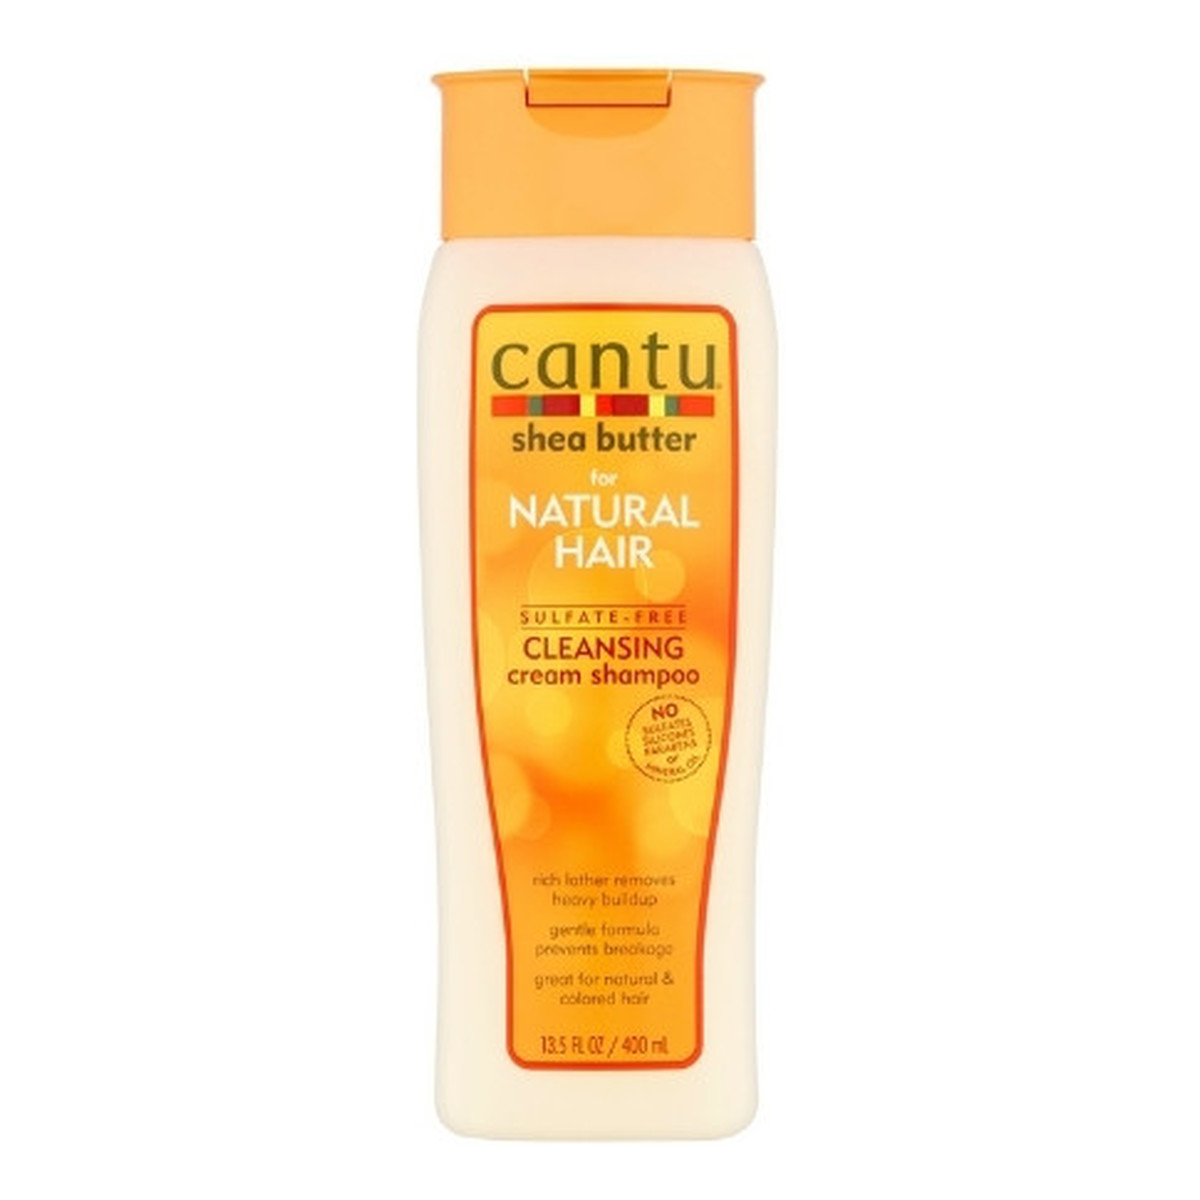 Cantu Shea Butter Sulfate-Free Cleansing Cream Shampoo - kremowy szampon do włosów 400ml